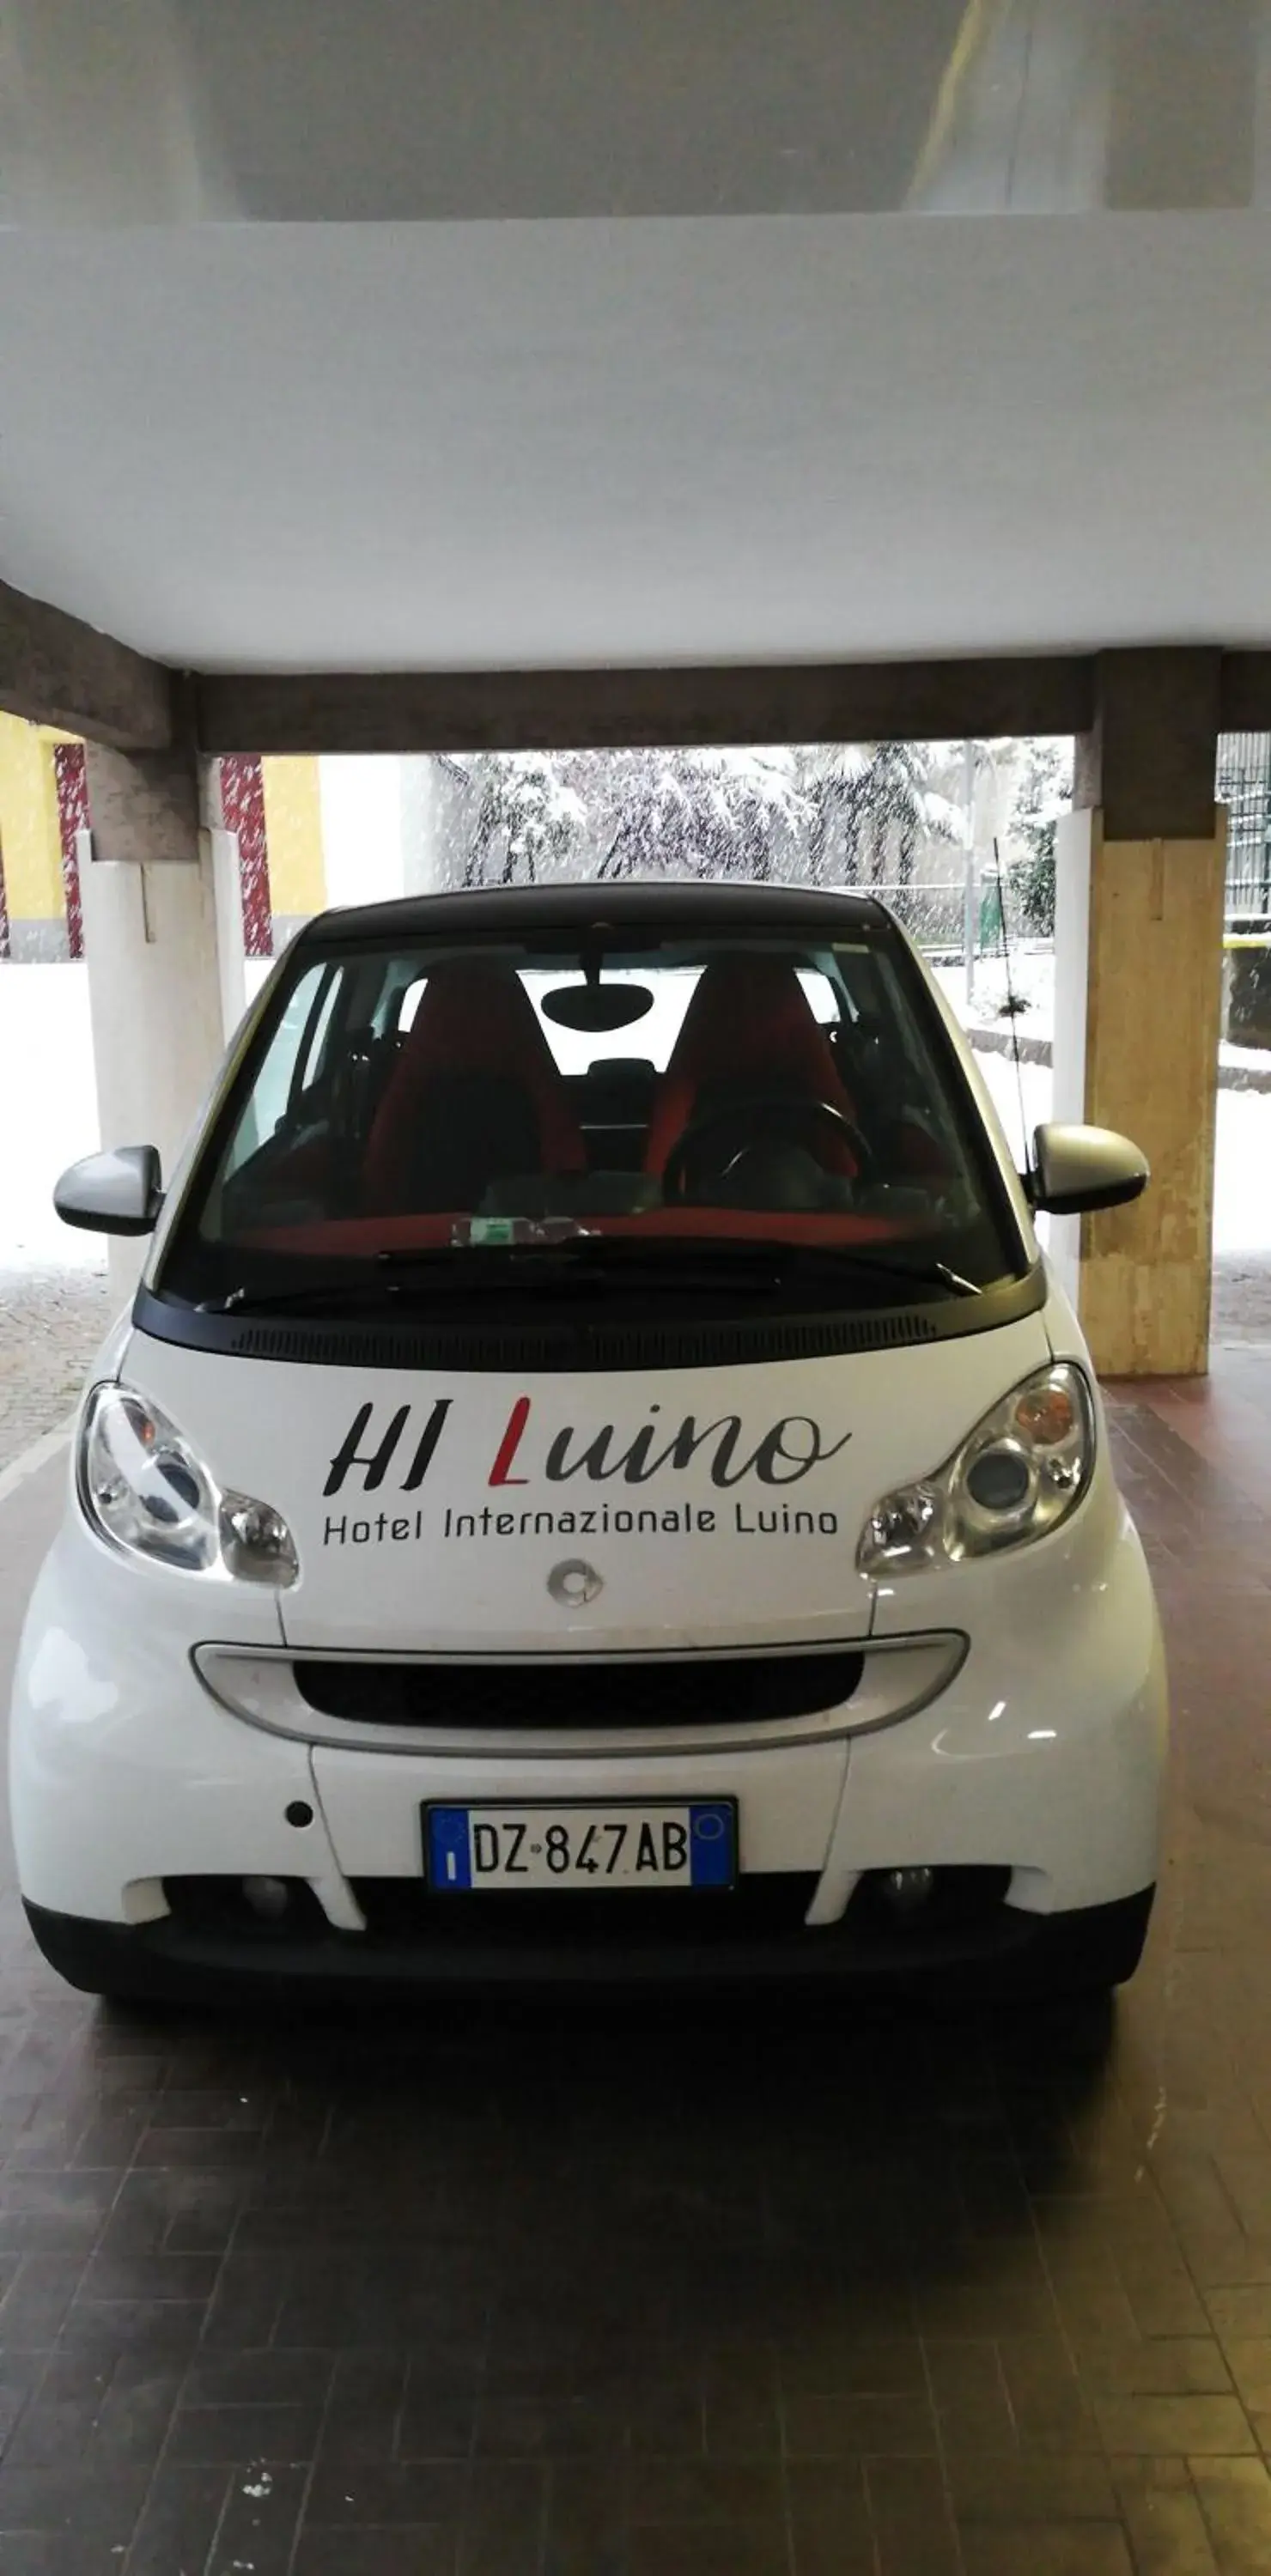 Parking in Hotel Internazionale Luino